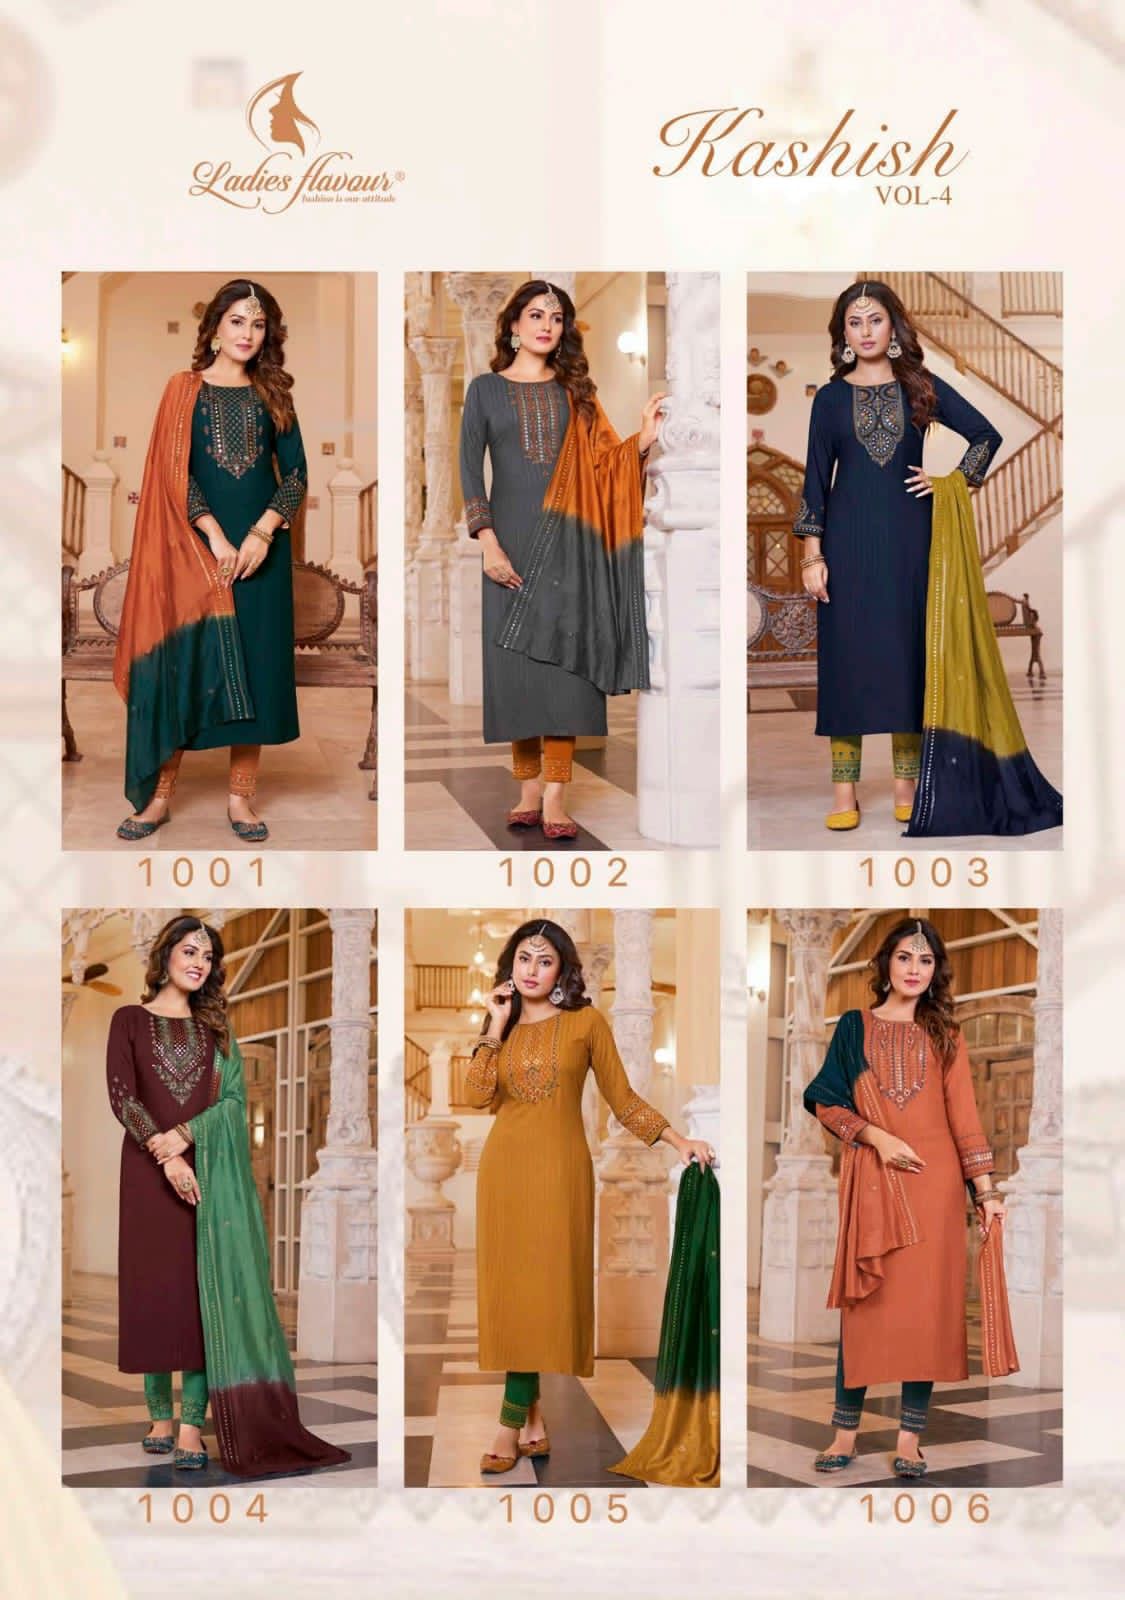 Ladies Flavour Kashish Vol 4 collection 11